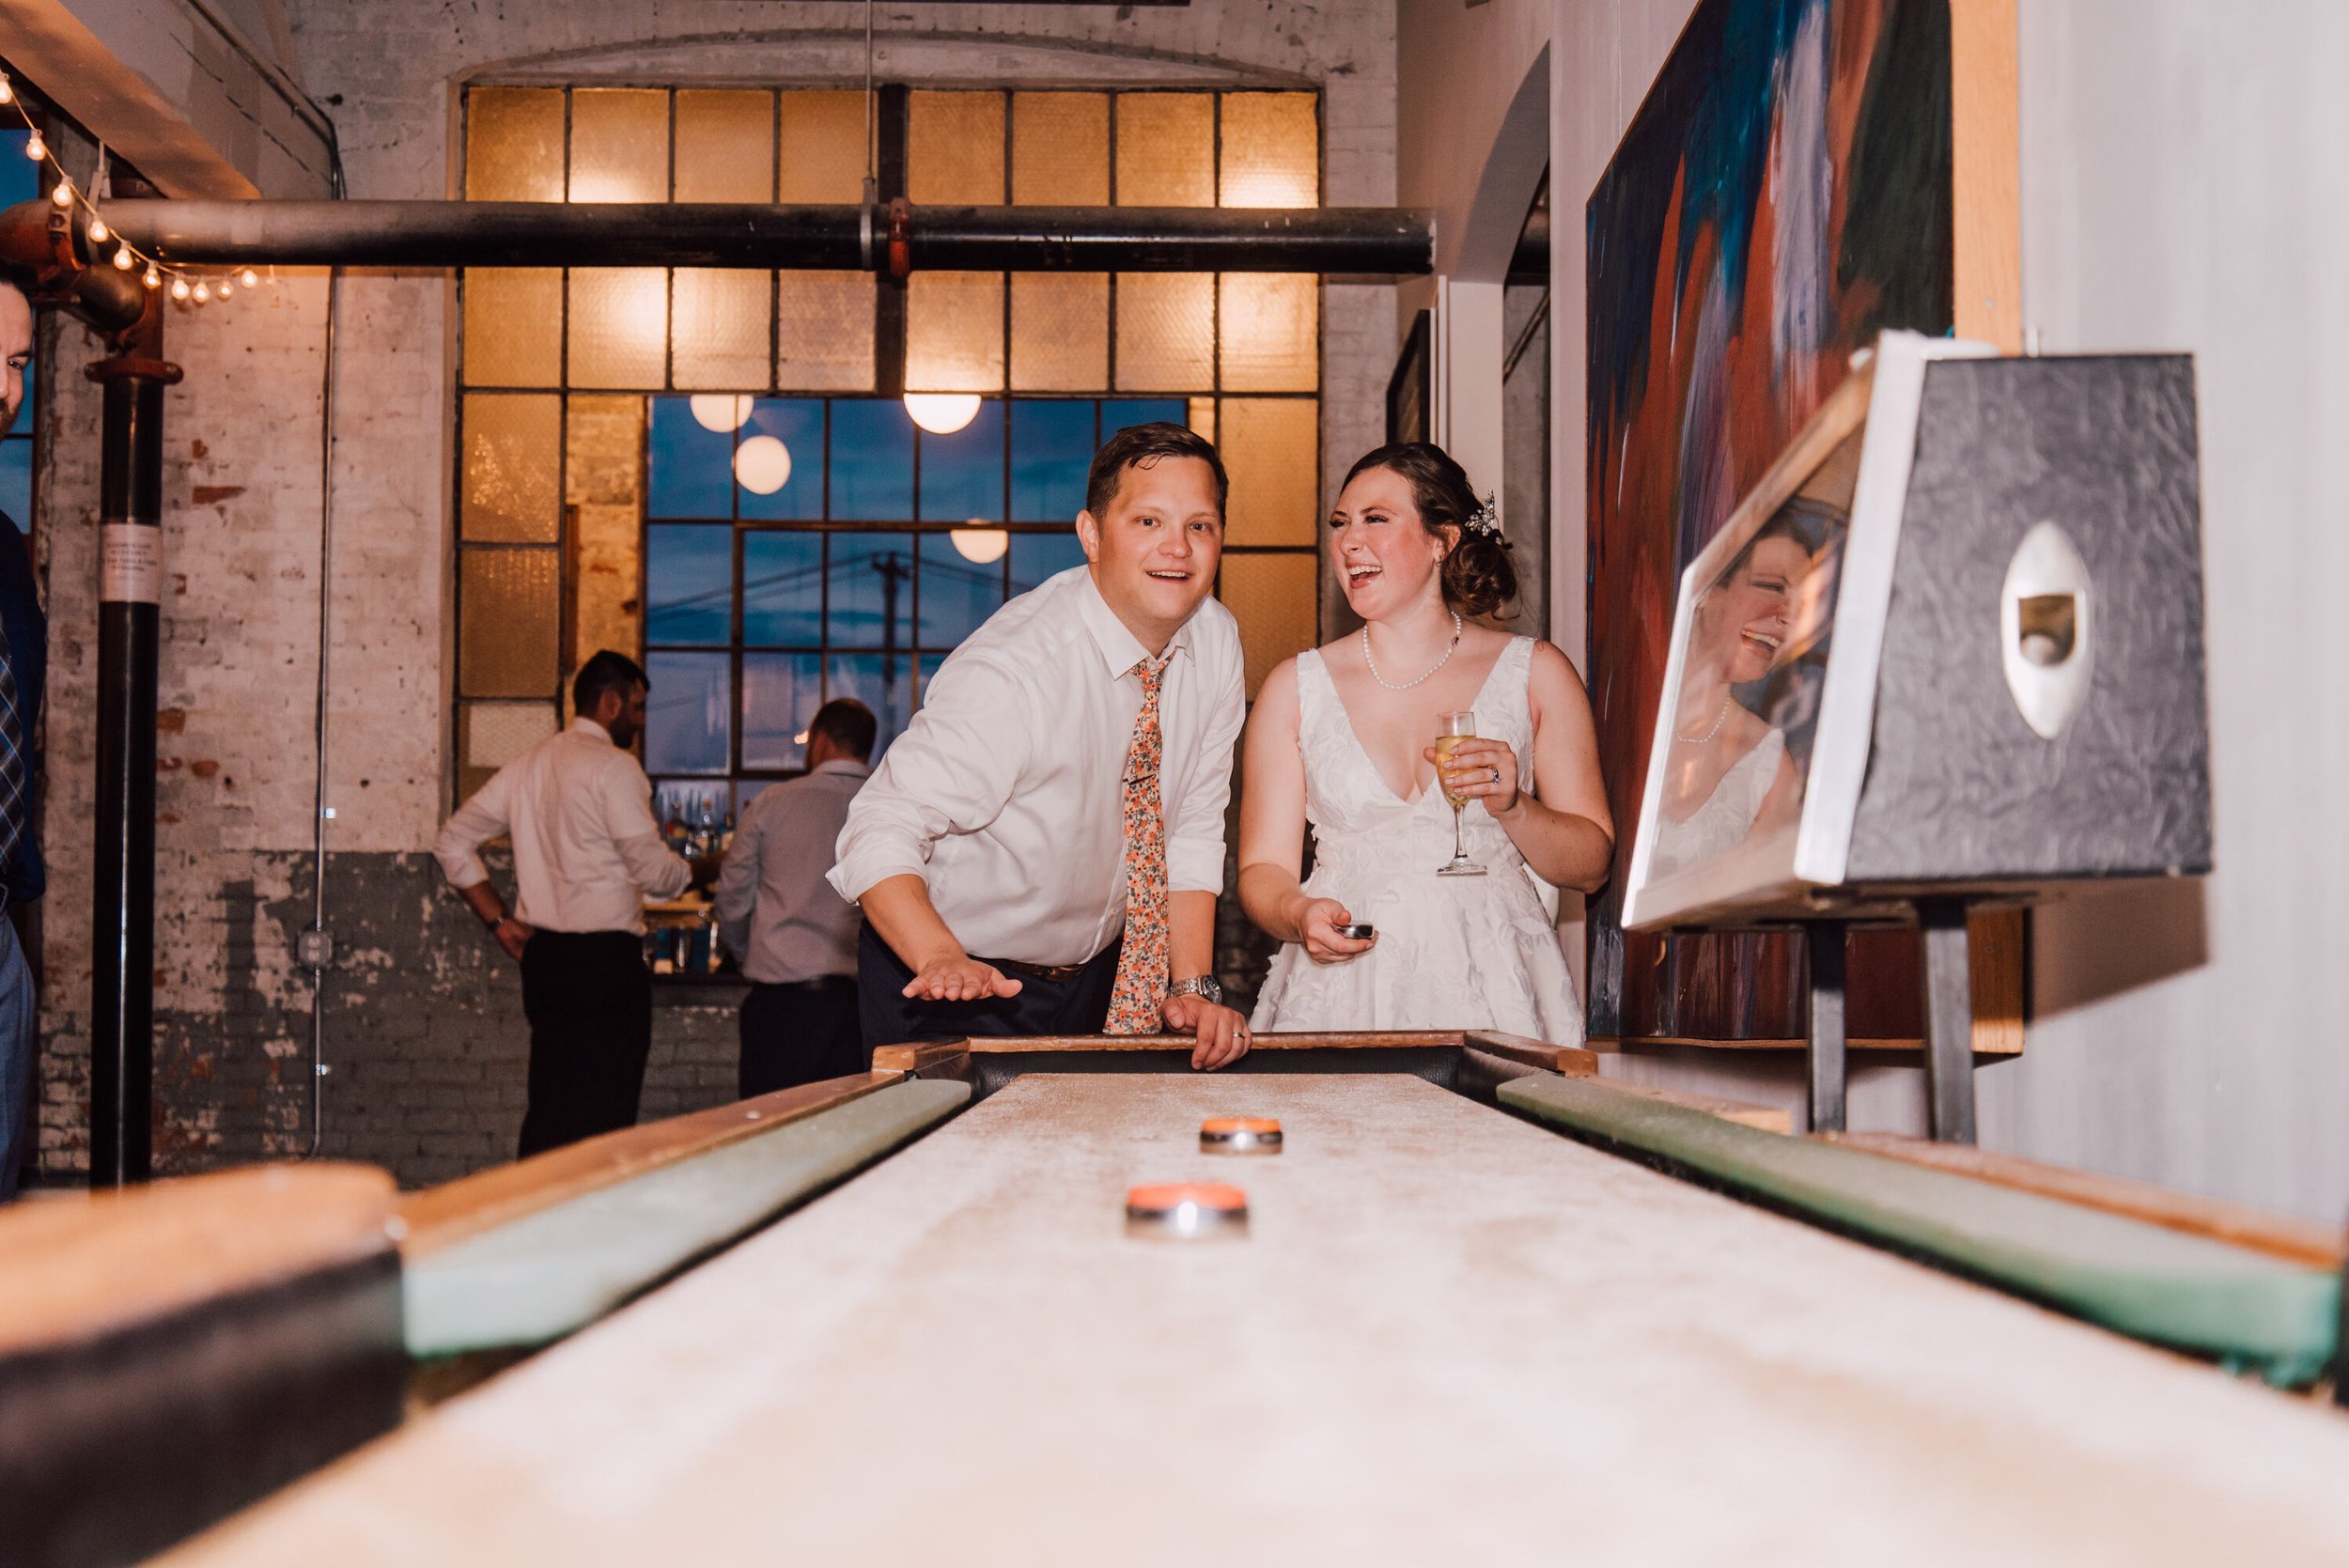  Bride and groom play shuffleboard at their warehouse wedding reception in Geneva ny 